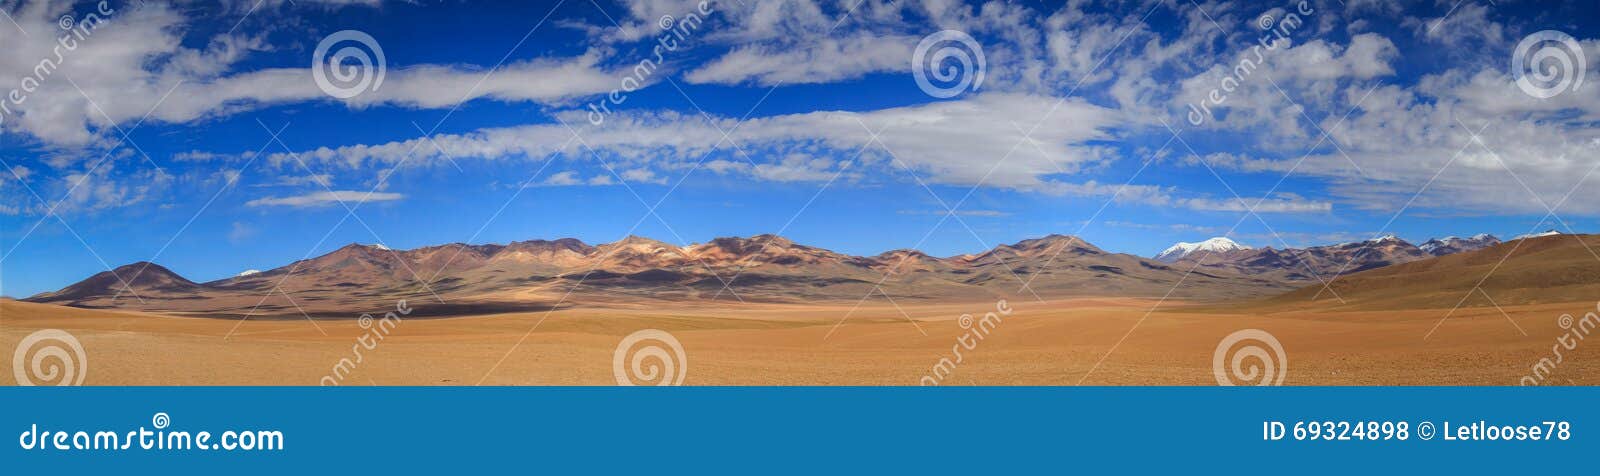 7 colors mountain panorama, altiplano, bolivia